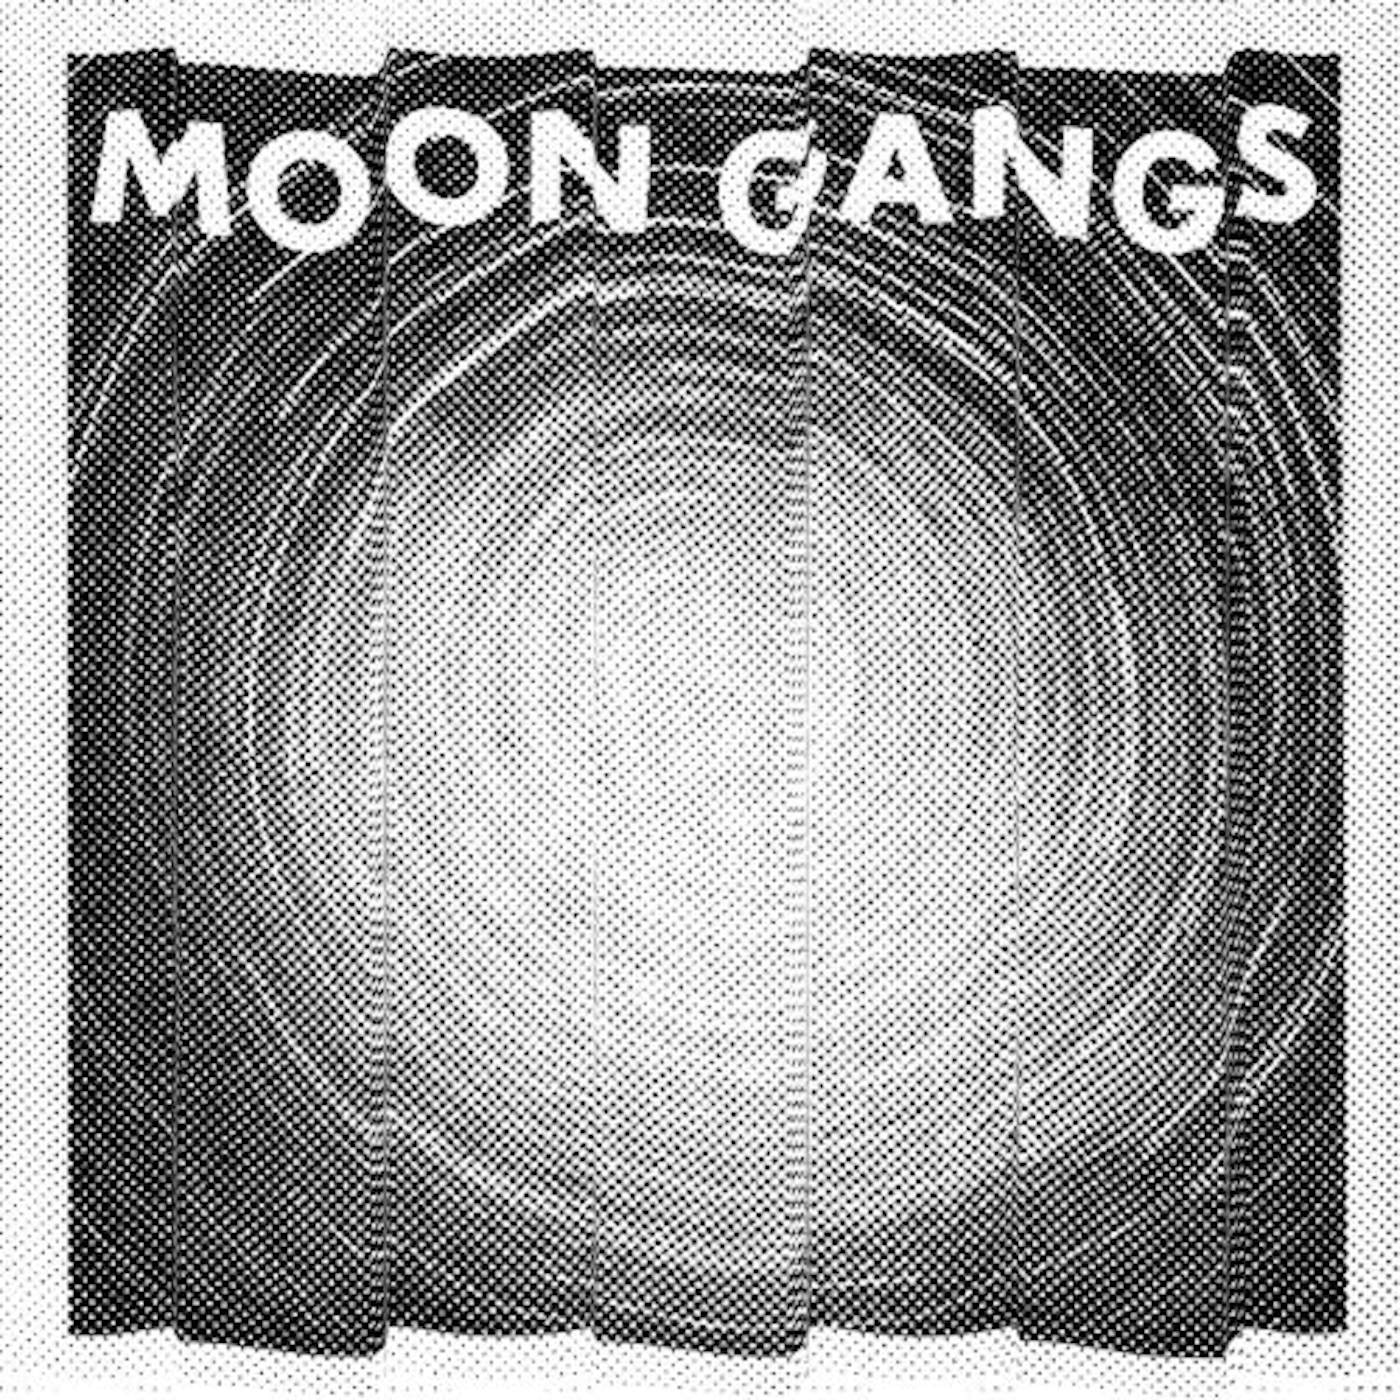 Moon Gangs Vinyl Record